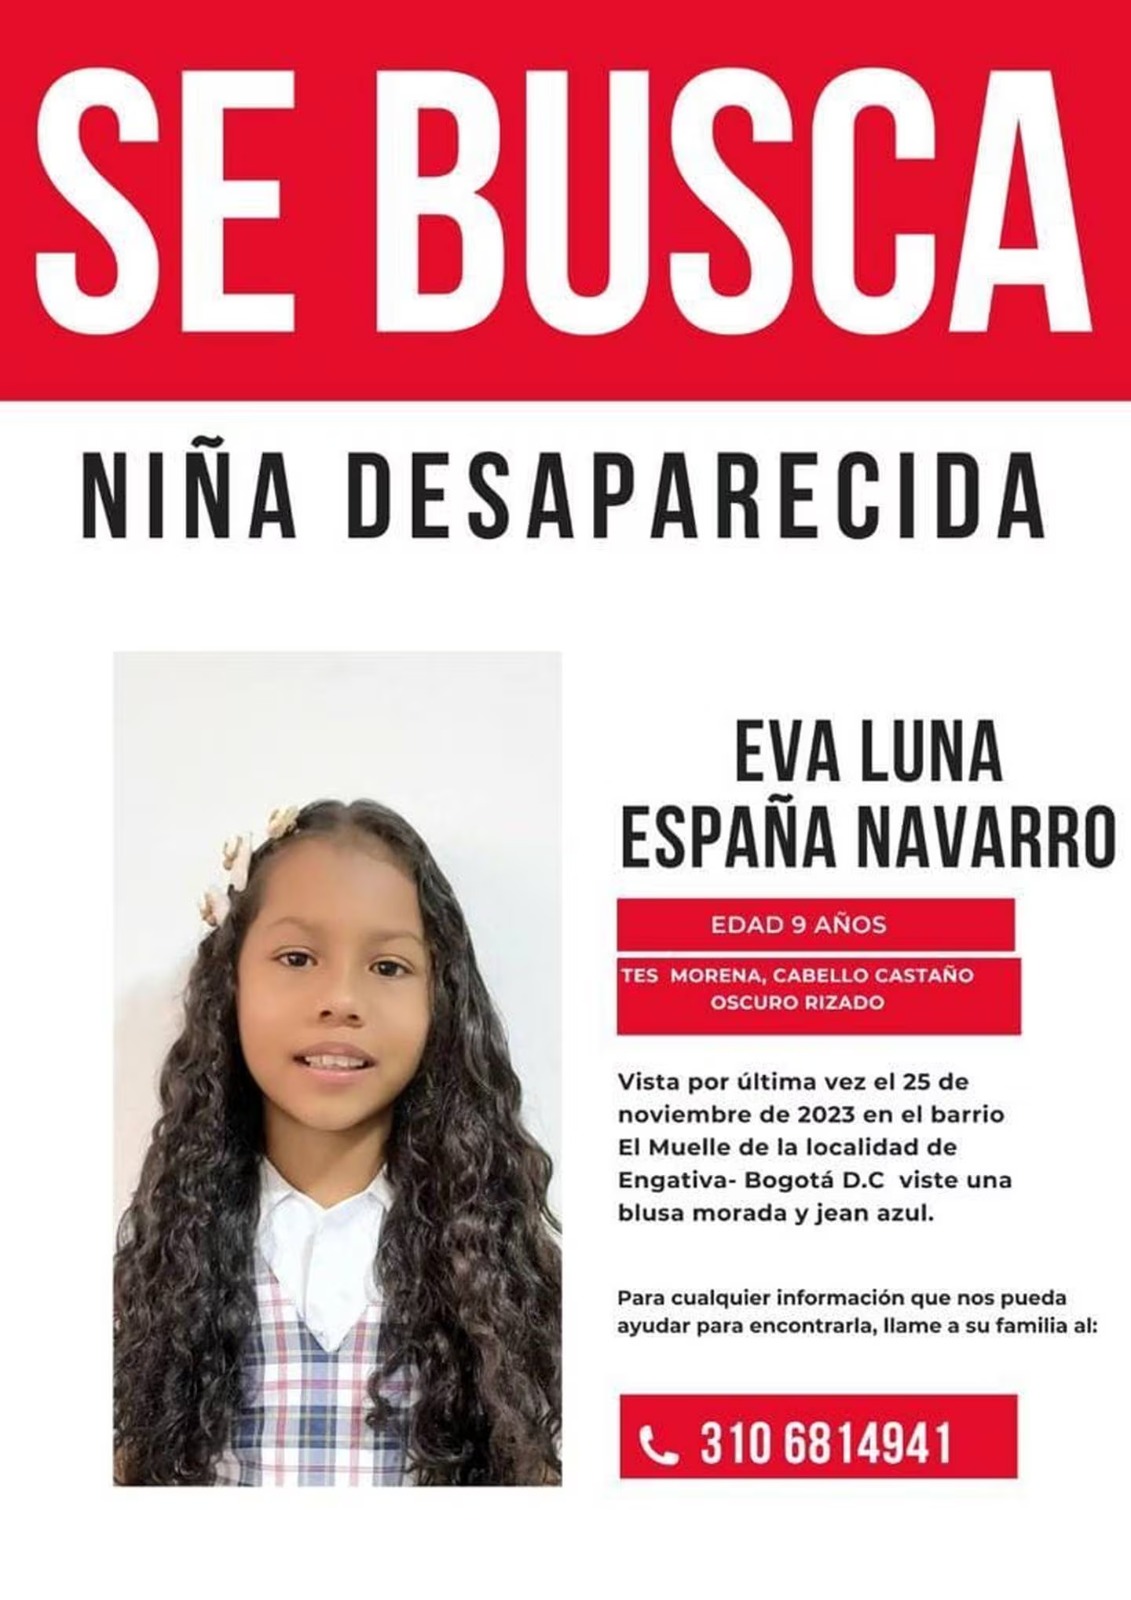 Eva Luna España se encuentra desaparecida.